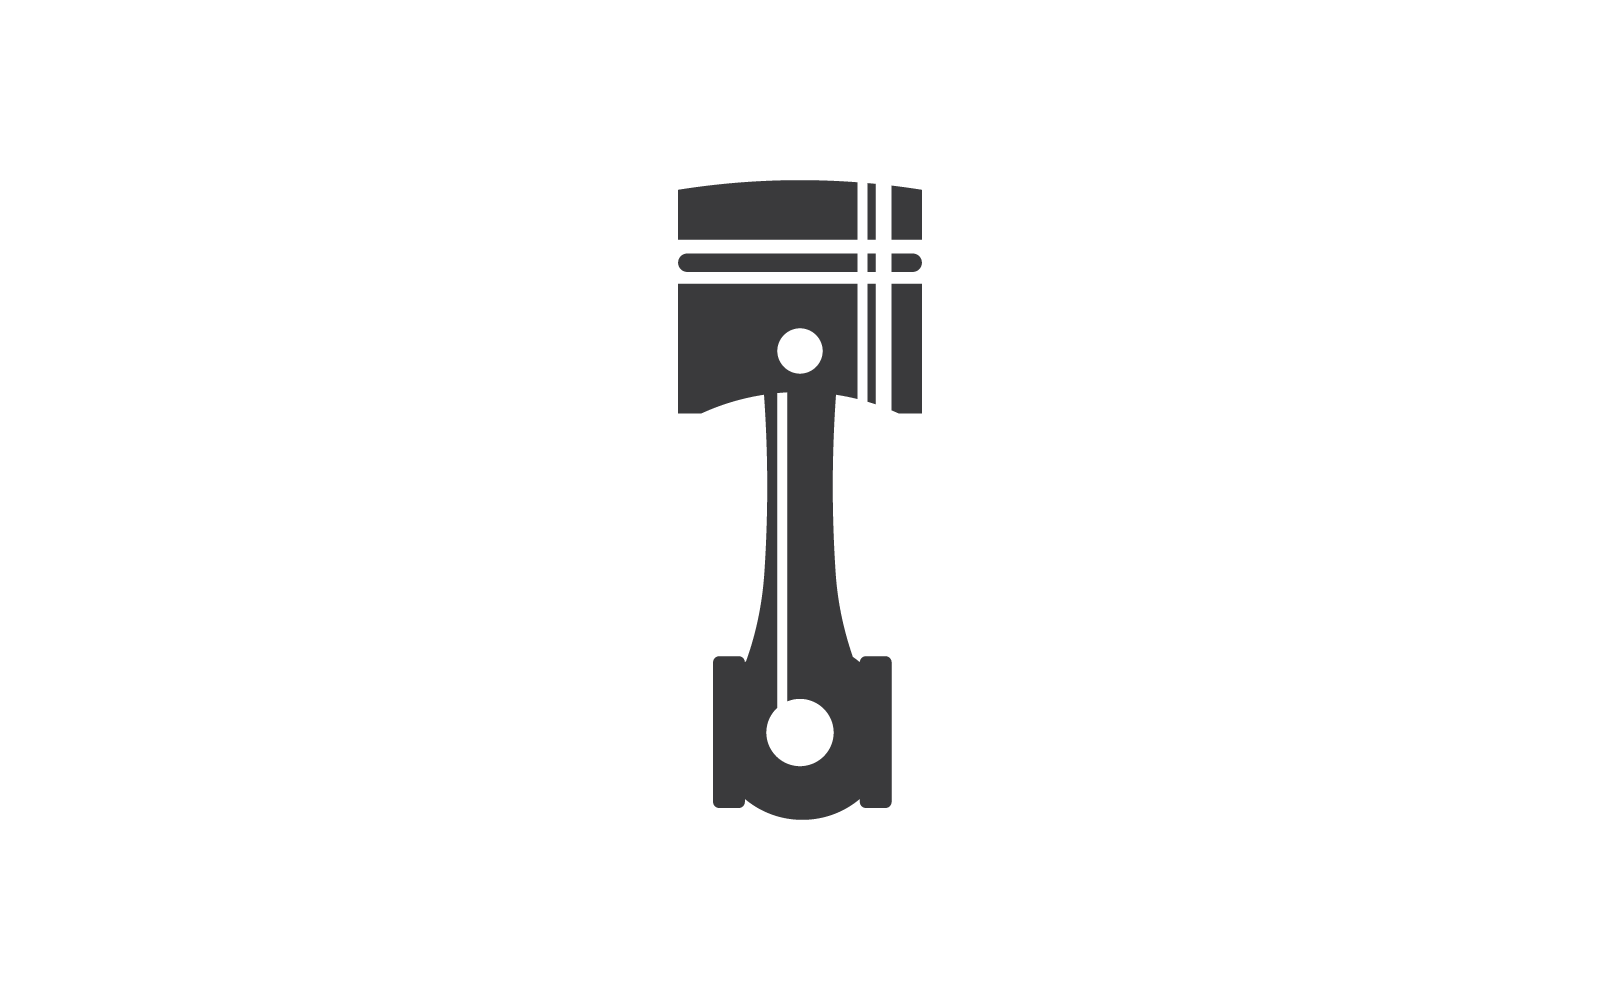 Piston auto service logo flat design